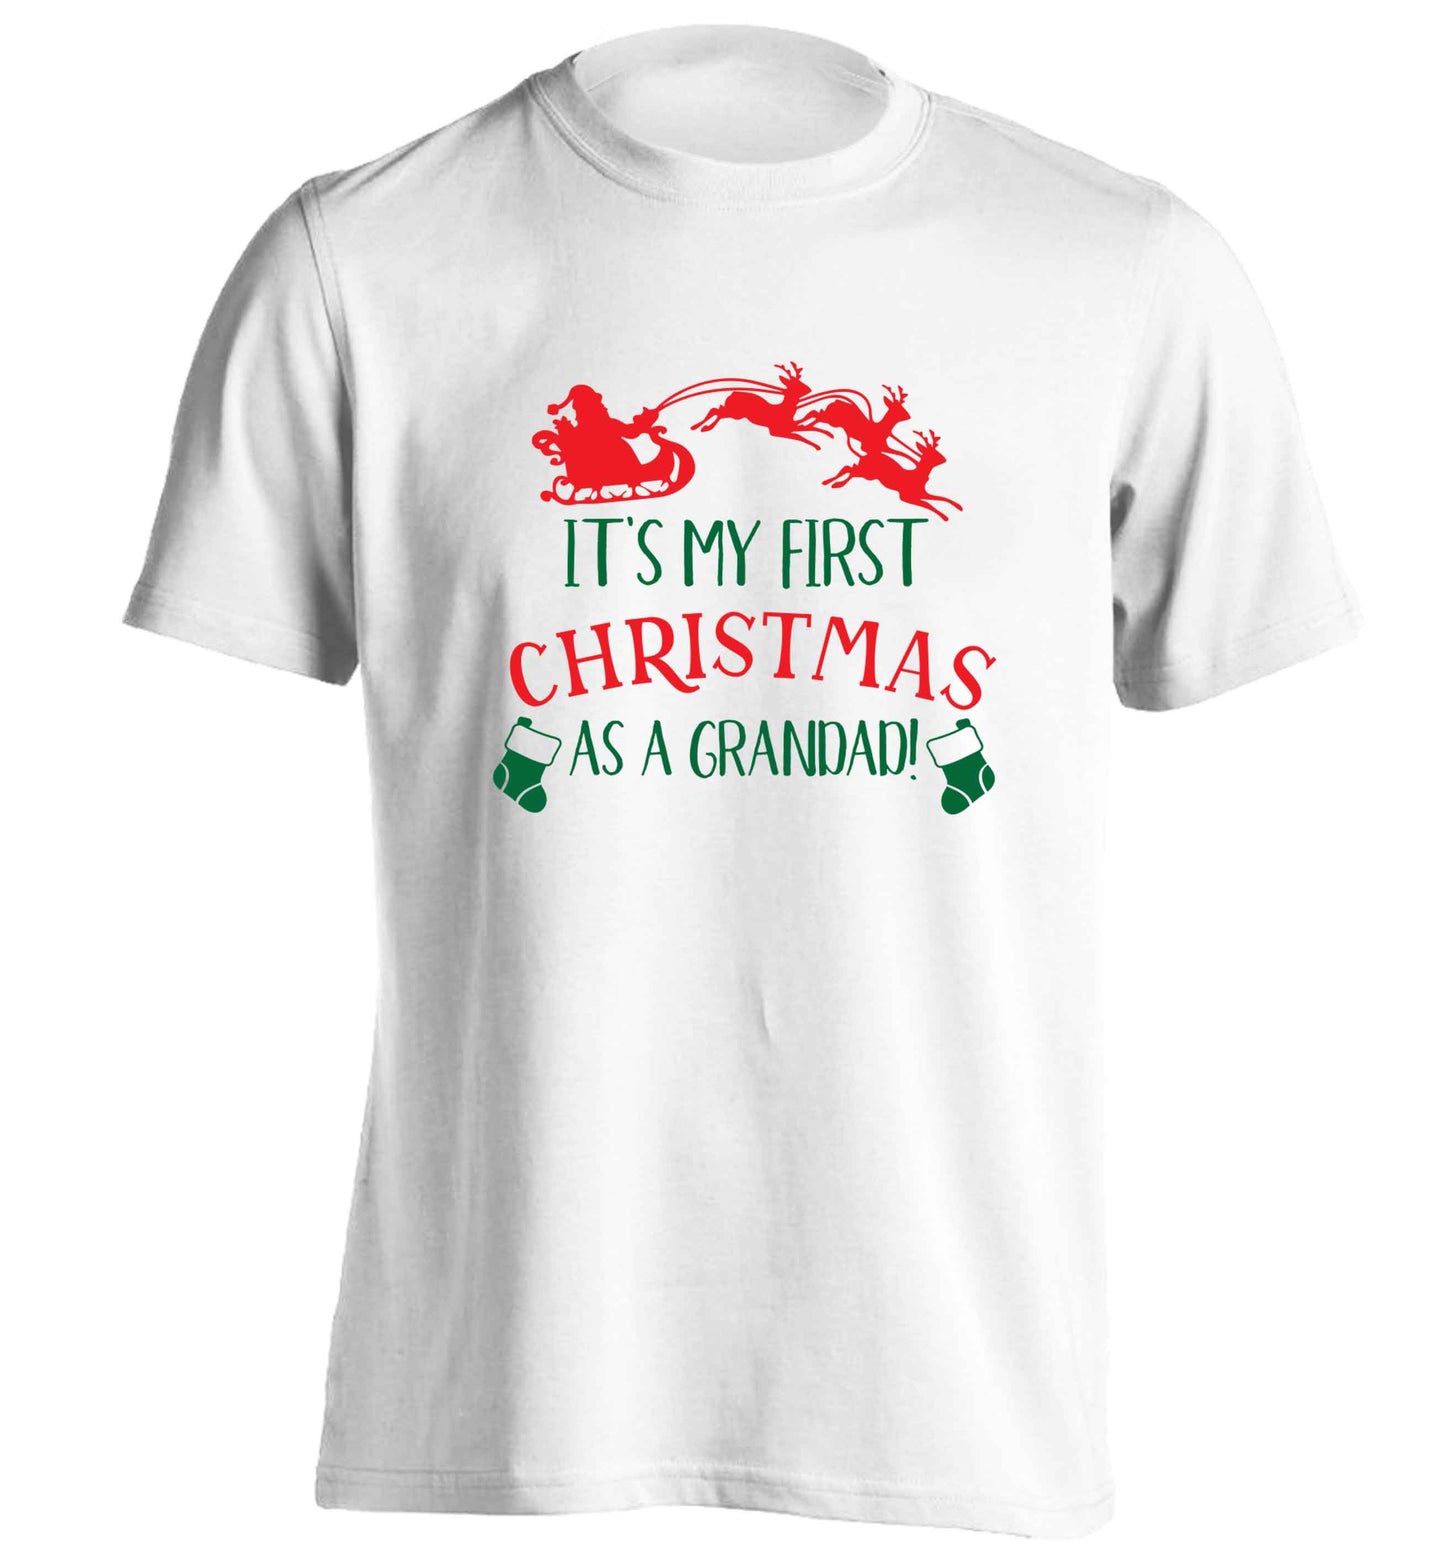 It's my first Christmas as a grandad! adults unisex white Tshirt 2XL